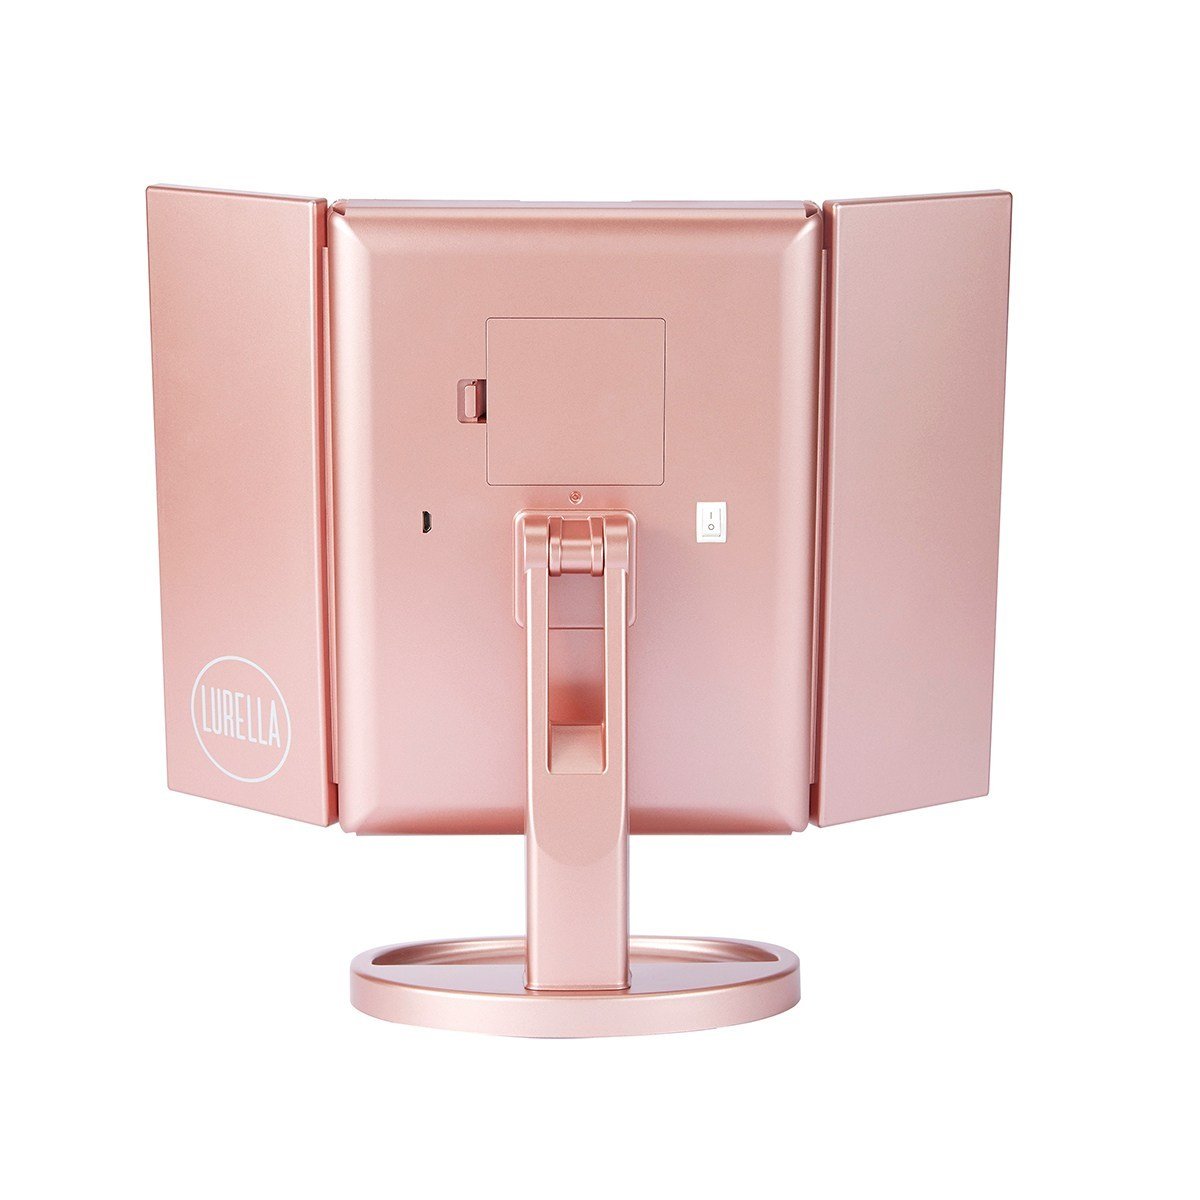 Lurella Cosmetics - LED Mirror Rose Gold